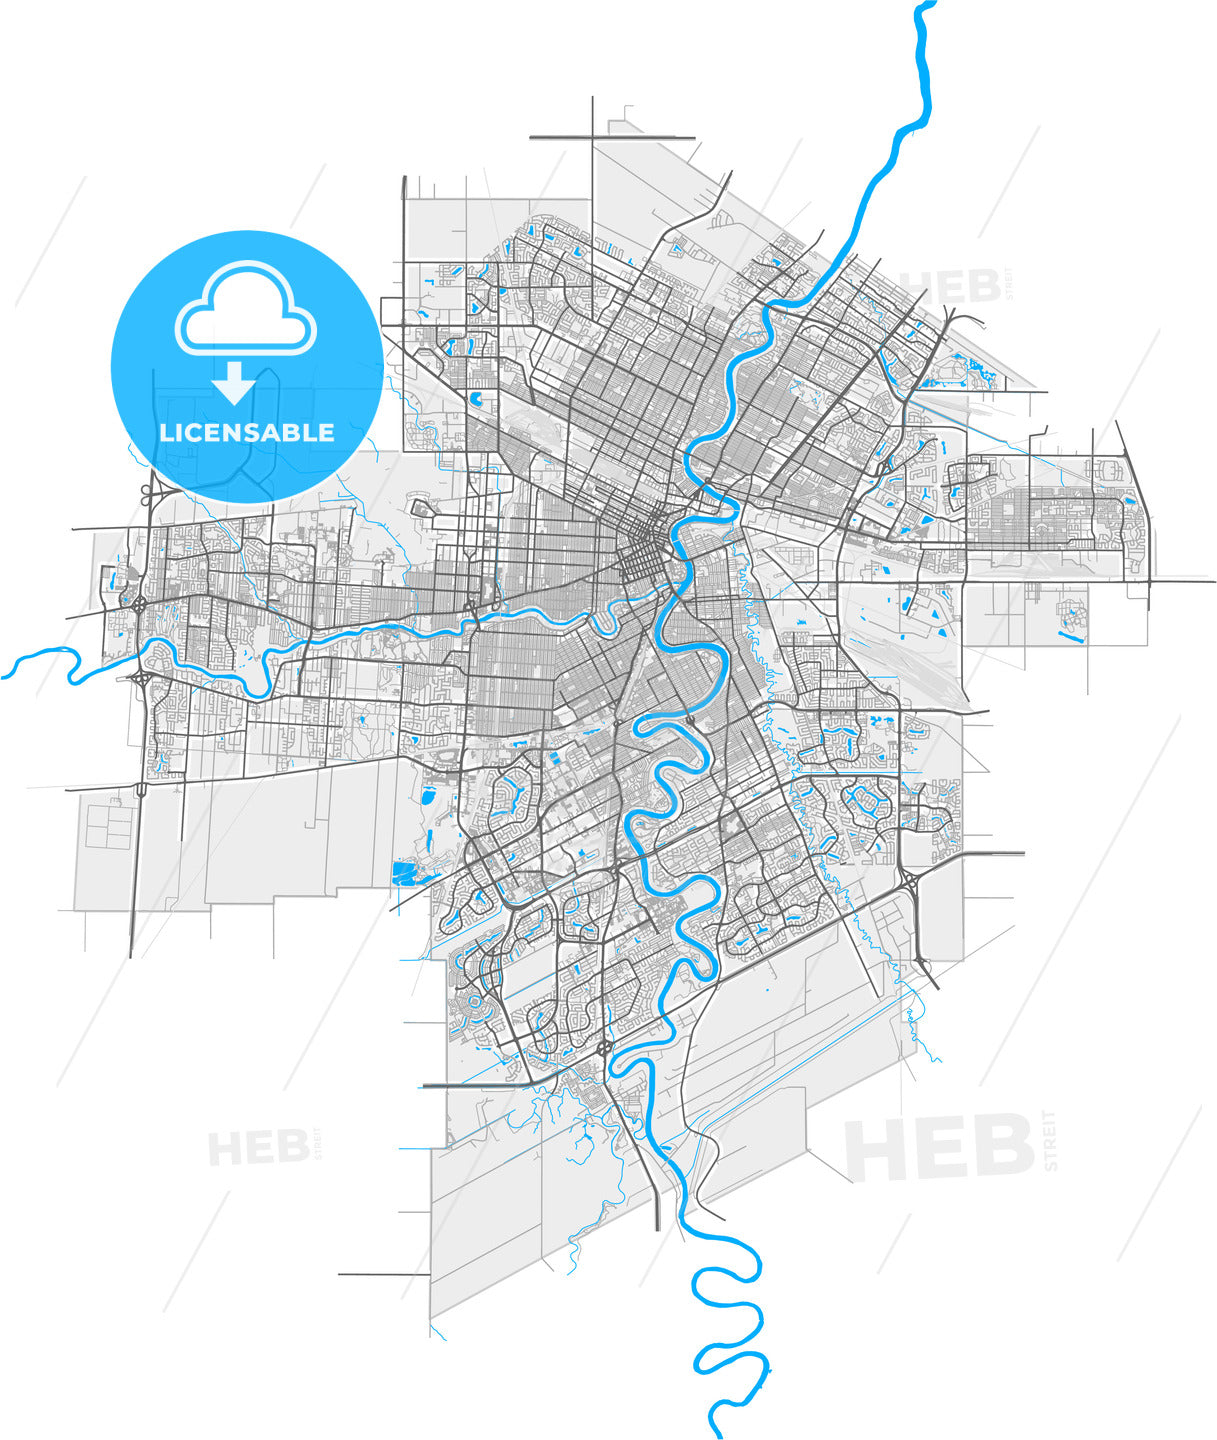 Winnipeg, Manitoba, Canada, high quality vector map